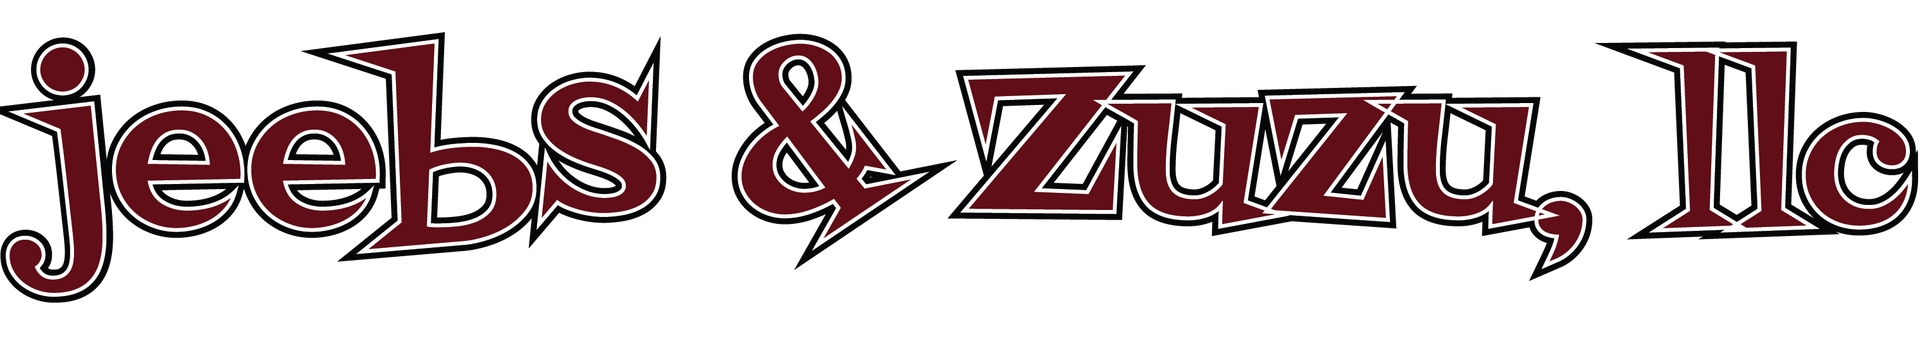 Jeebs & Zuzu | Logo